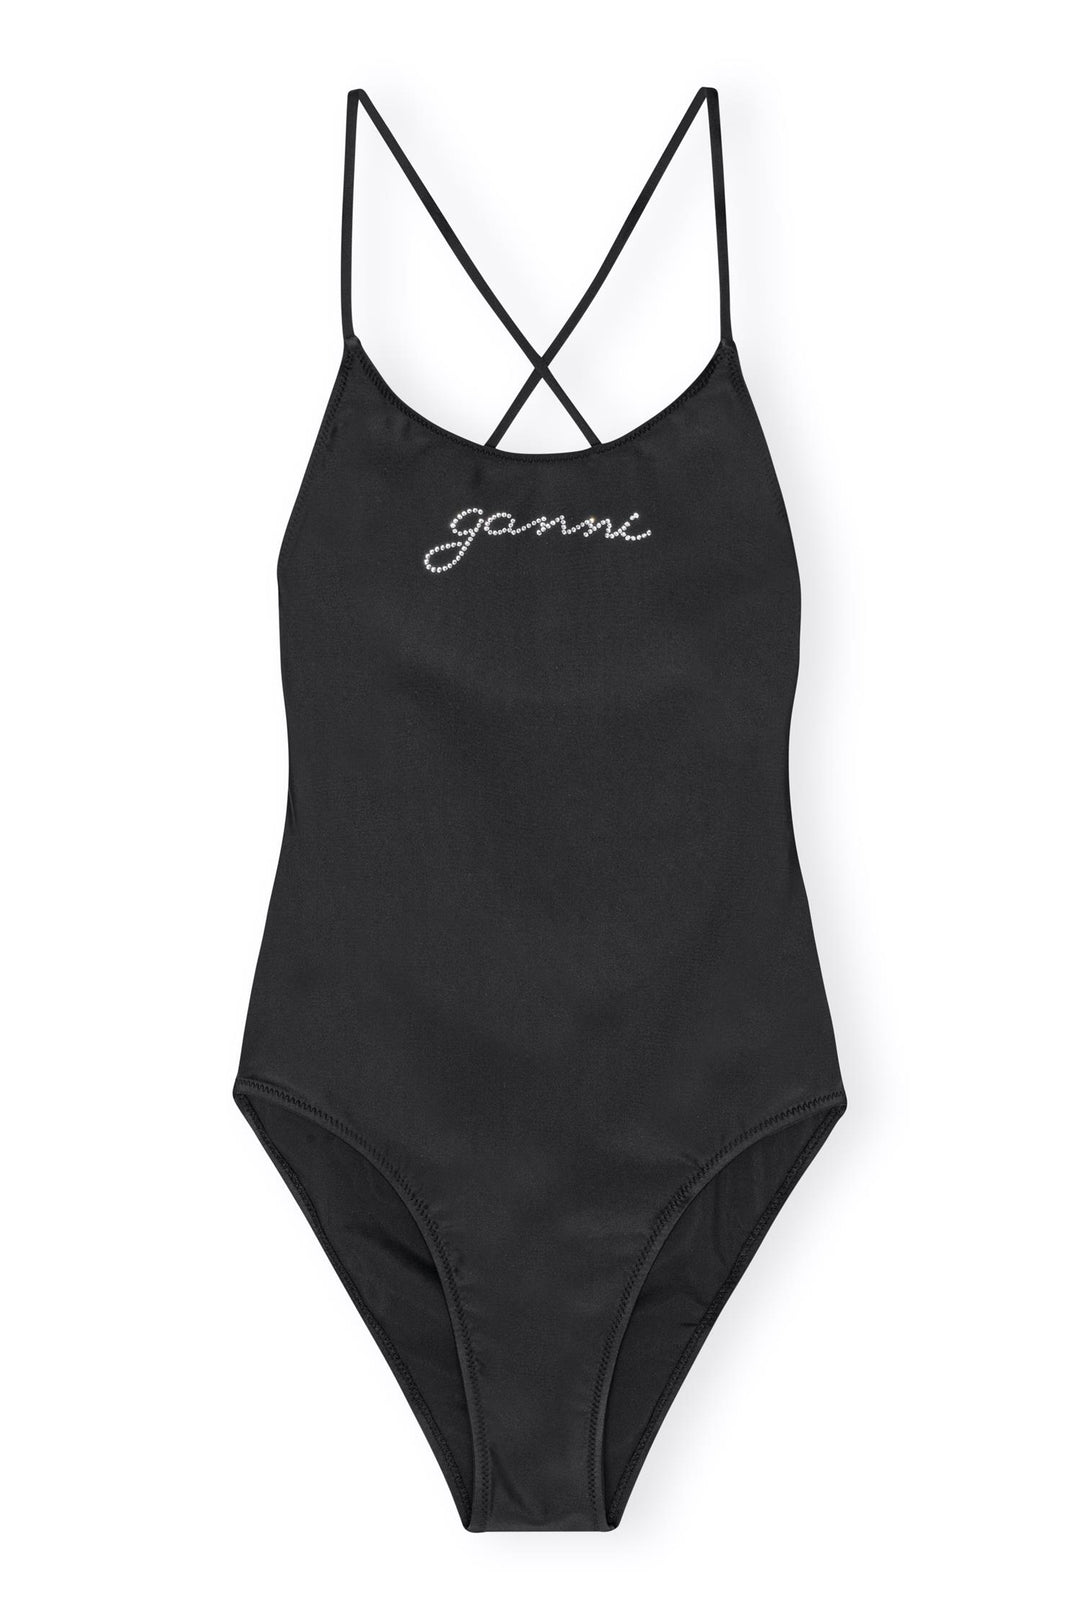 GANNI - Graphic Tie String Swimsuit - Dale